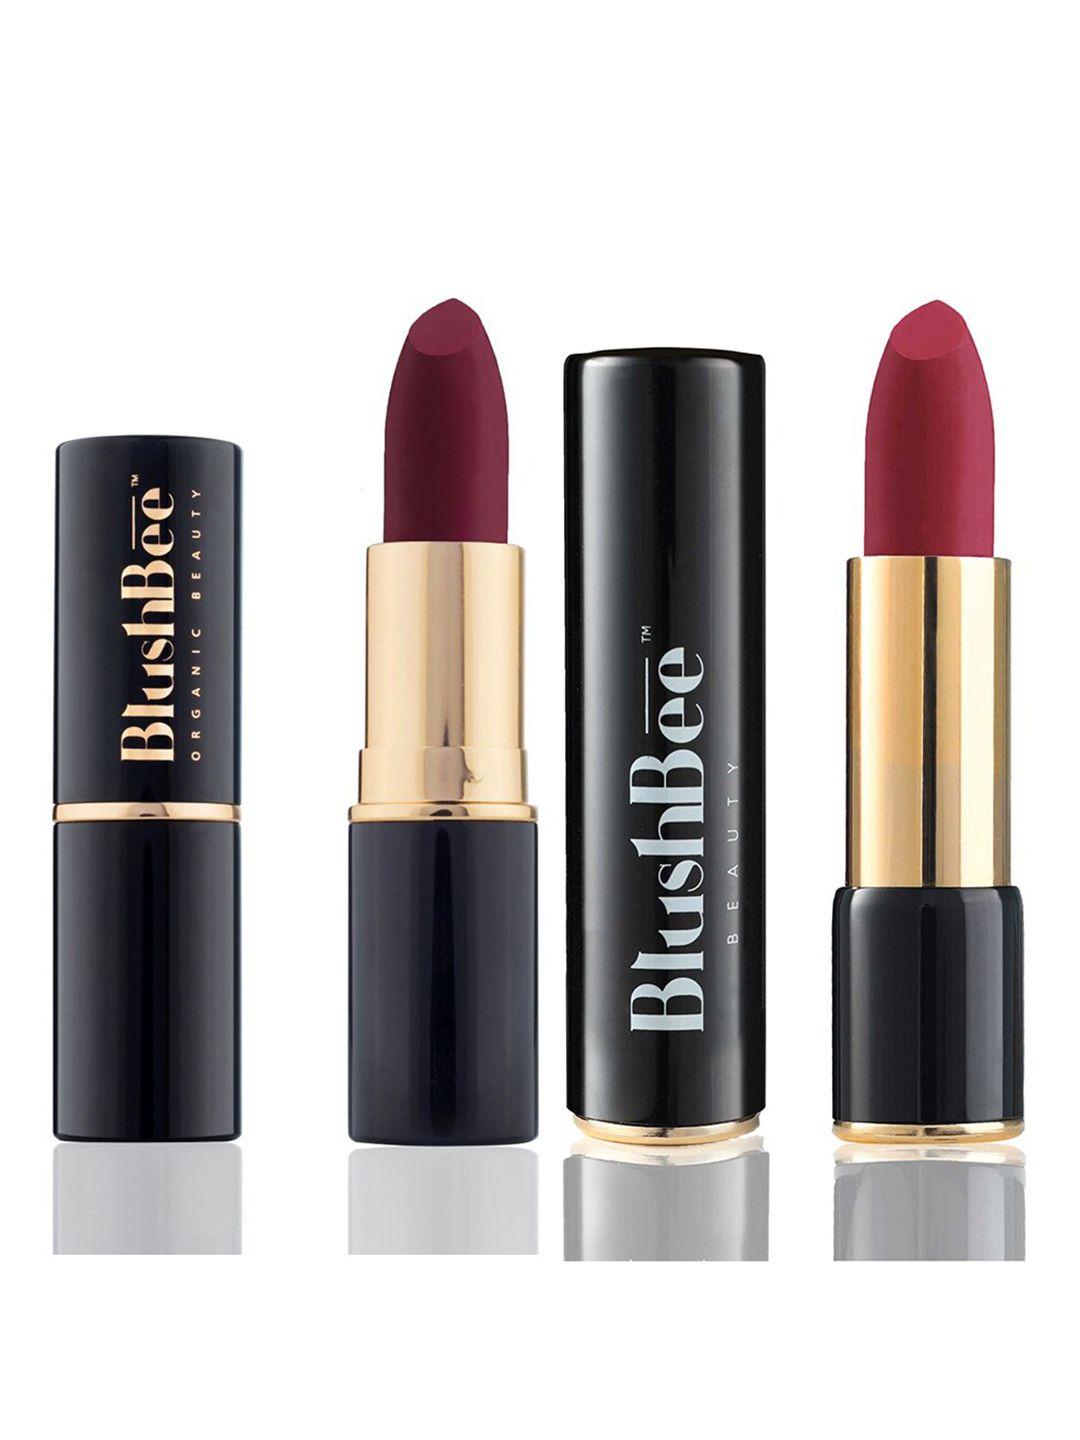 blushbee beauty set of 2 organic vegan lipstick - deep hue maroon bb02 & wine waltz bb08